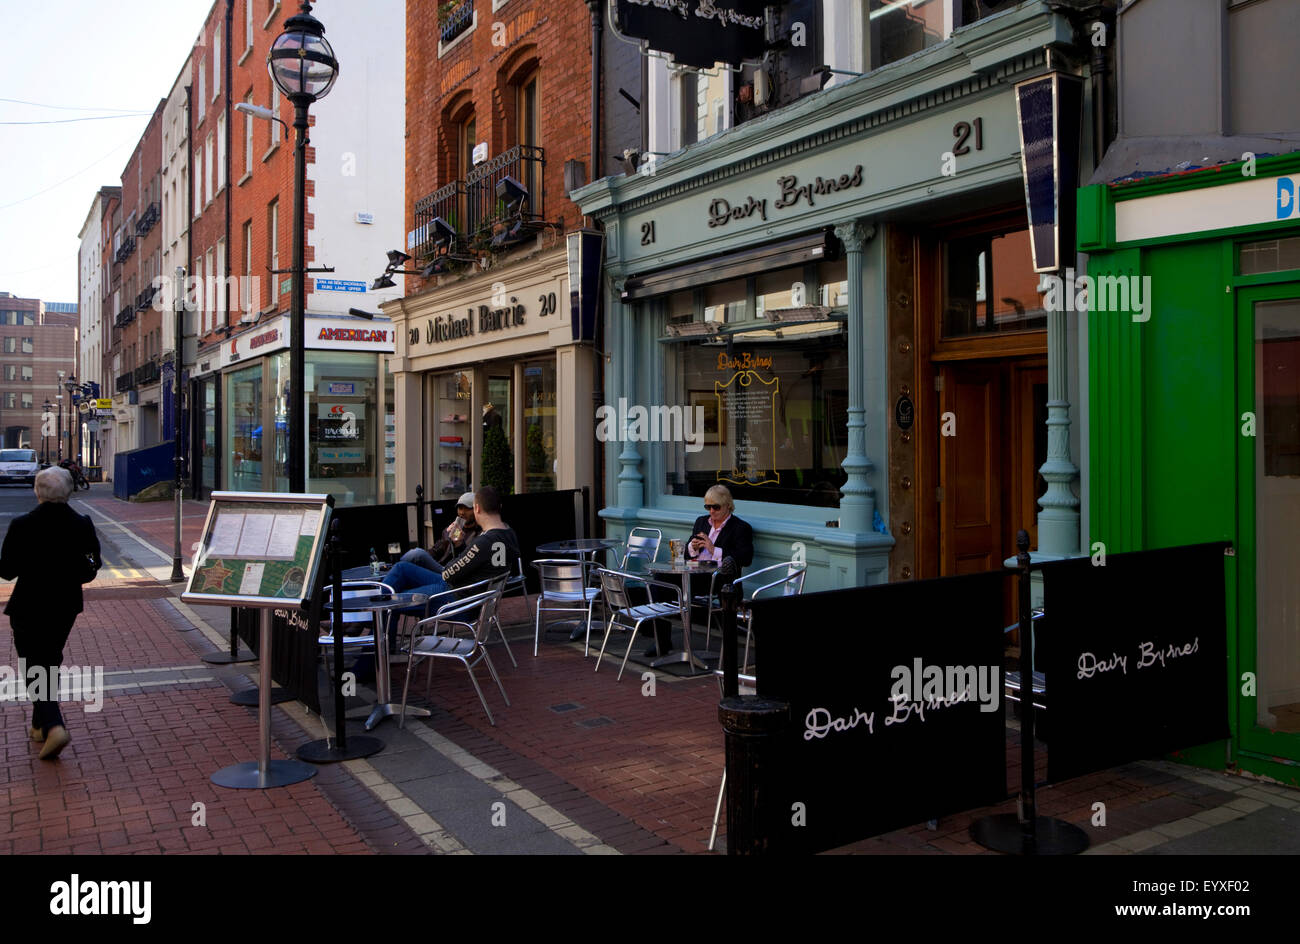 Davy Byrnes Pub - Synonym für Bloomsday feiern, James Joyce und seinem Buch "Ulysses", Duke Street, Dublin City, Irland Stockfoto